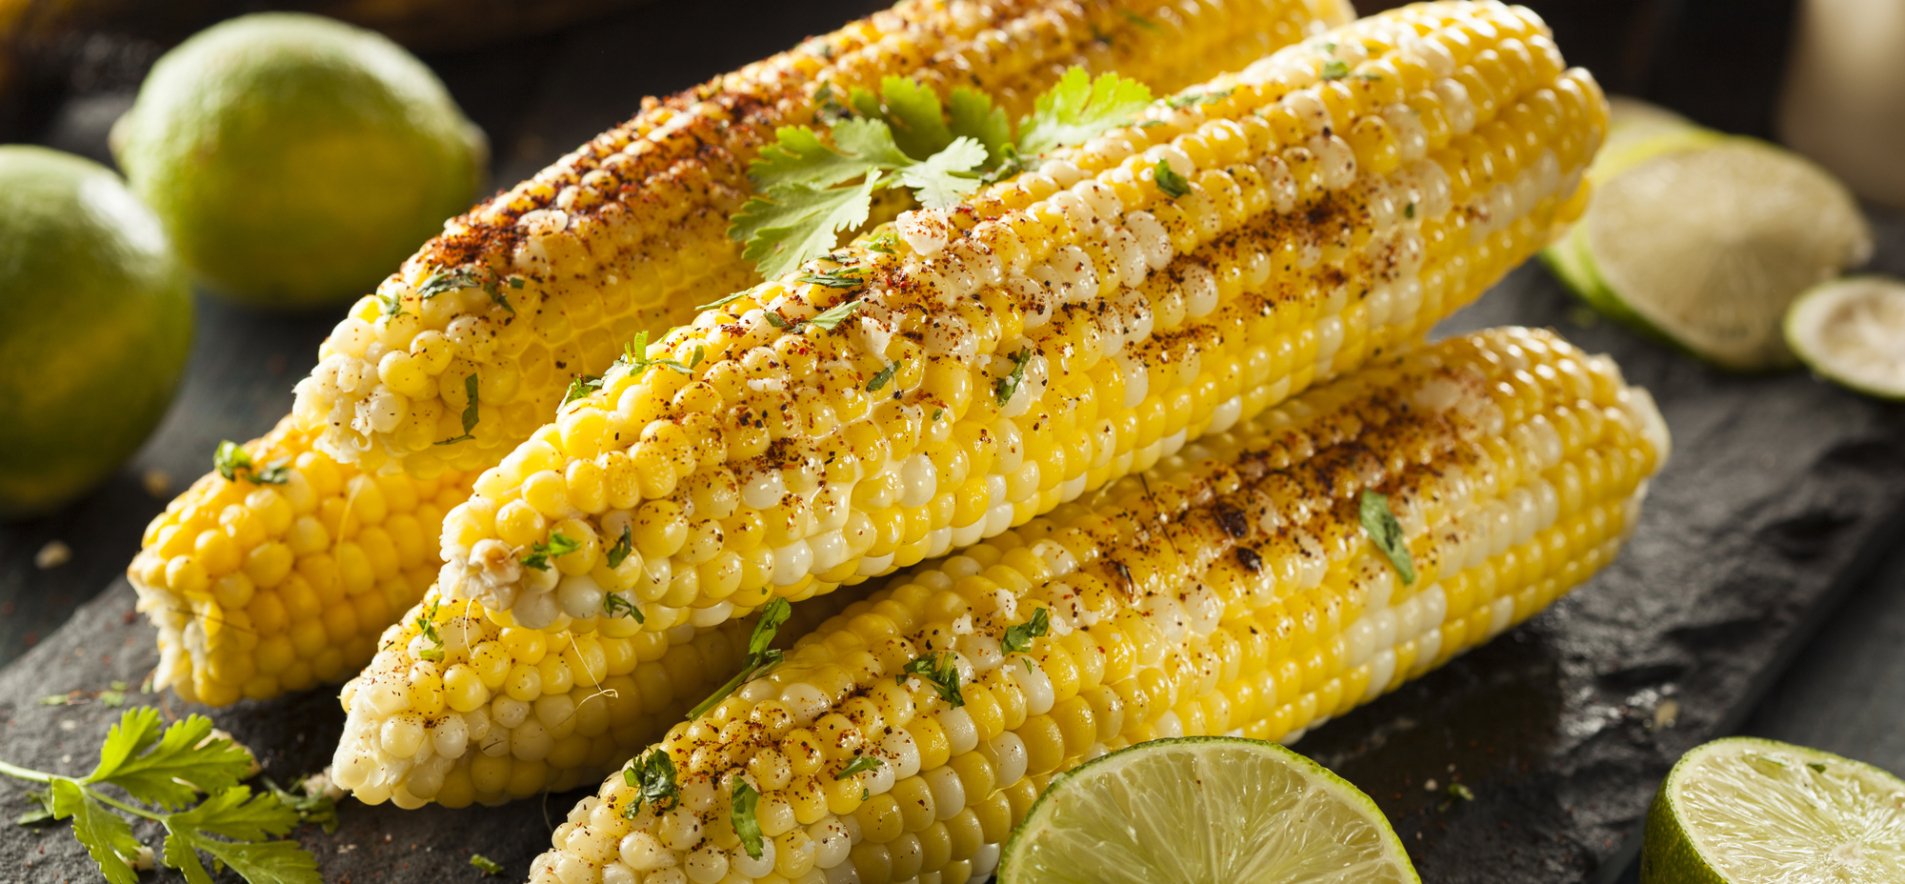 Кукуруза. Вареная кукуруза. Кукуруза початок. Перуанская кухня с кукурузой. Рецепт из свежей кукурузы